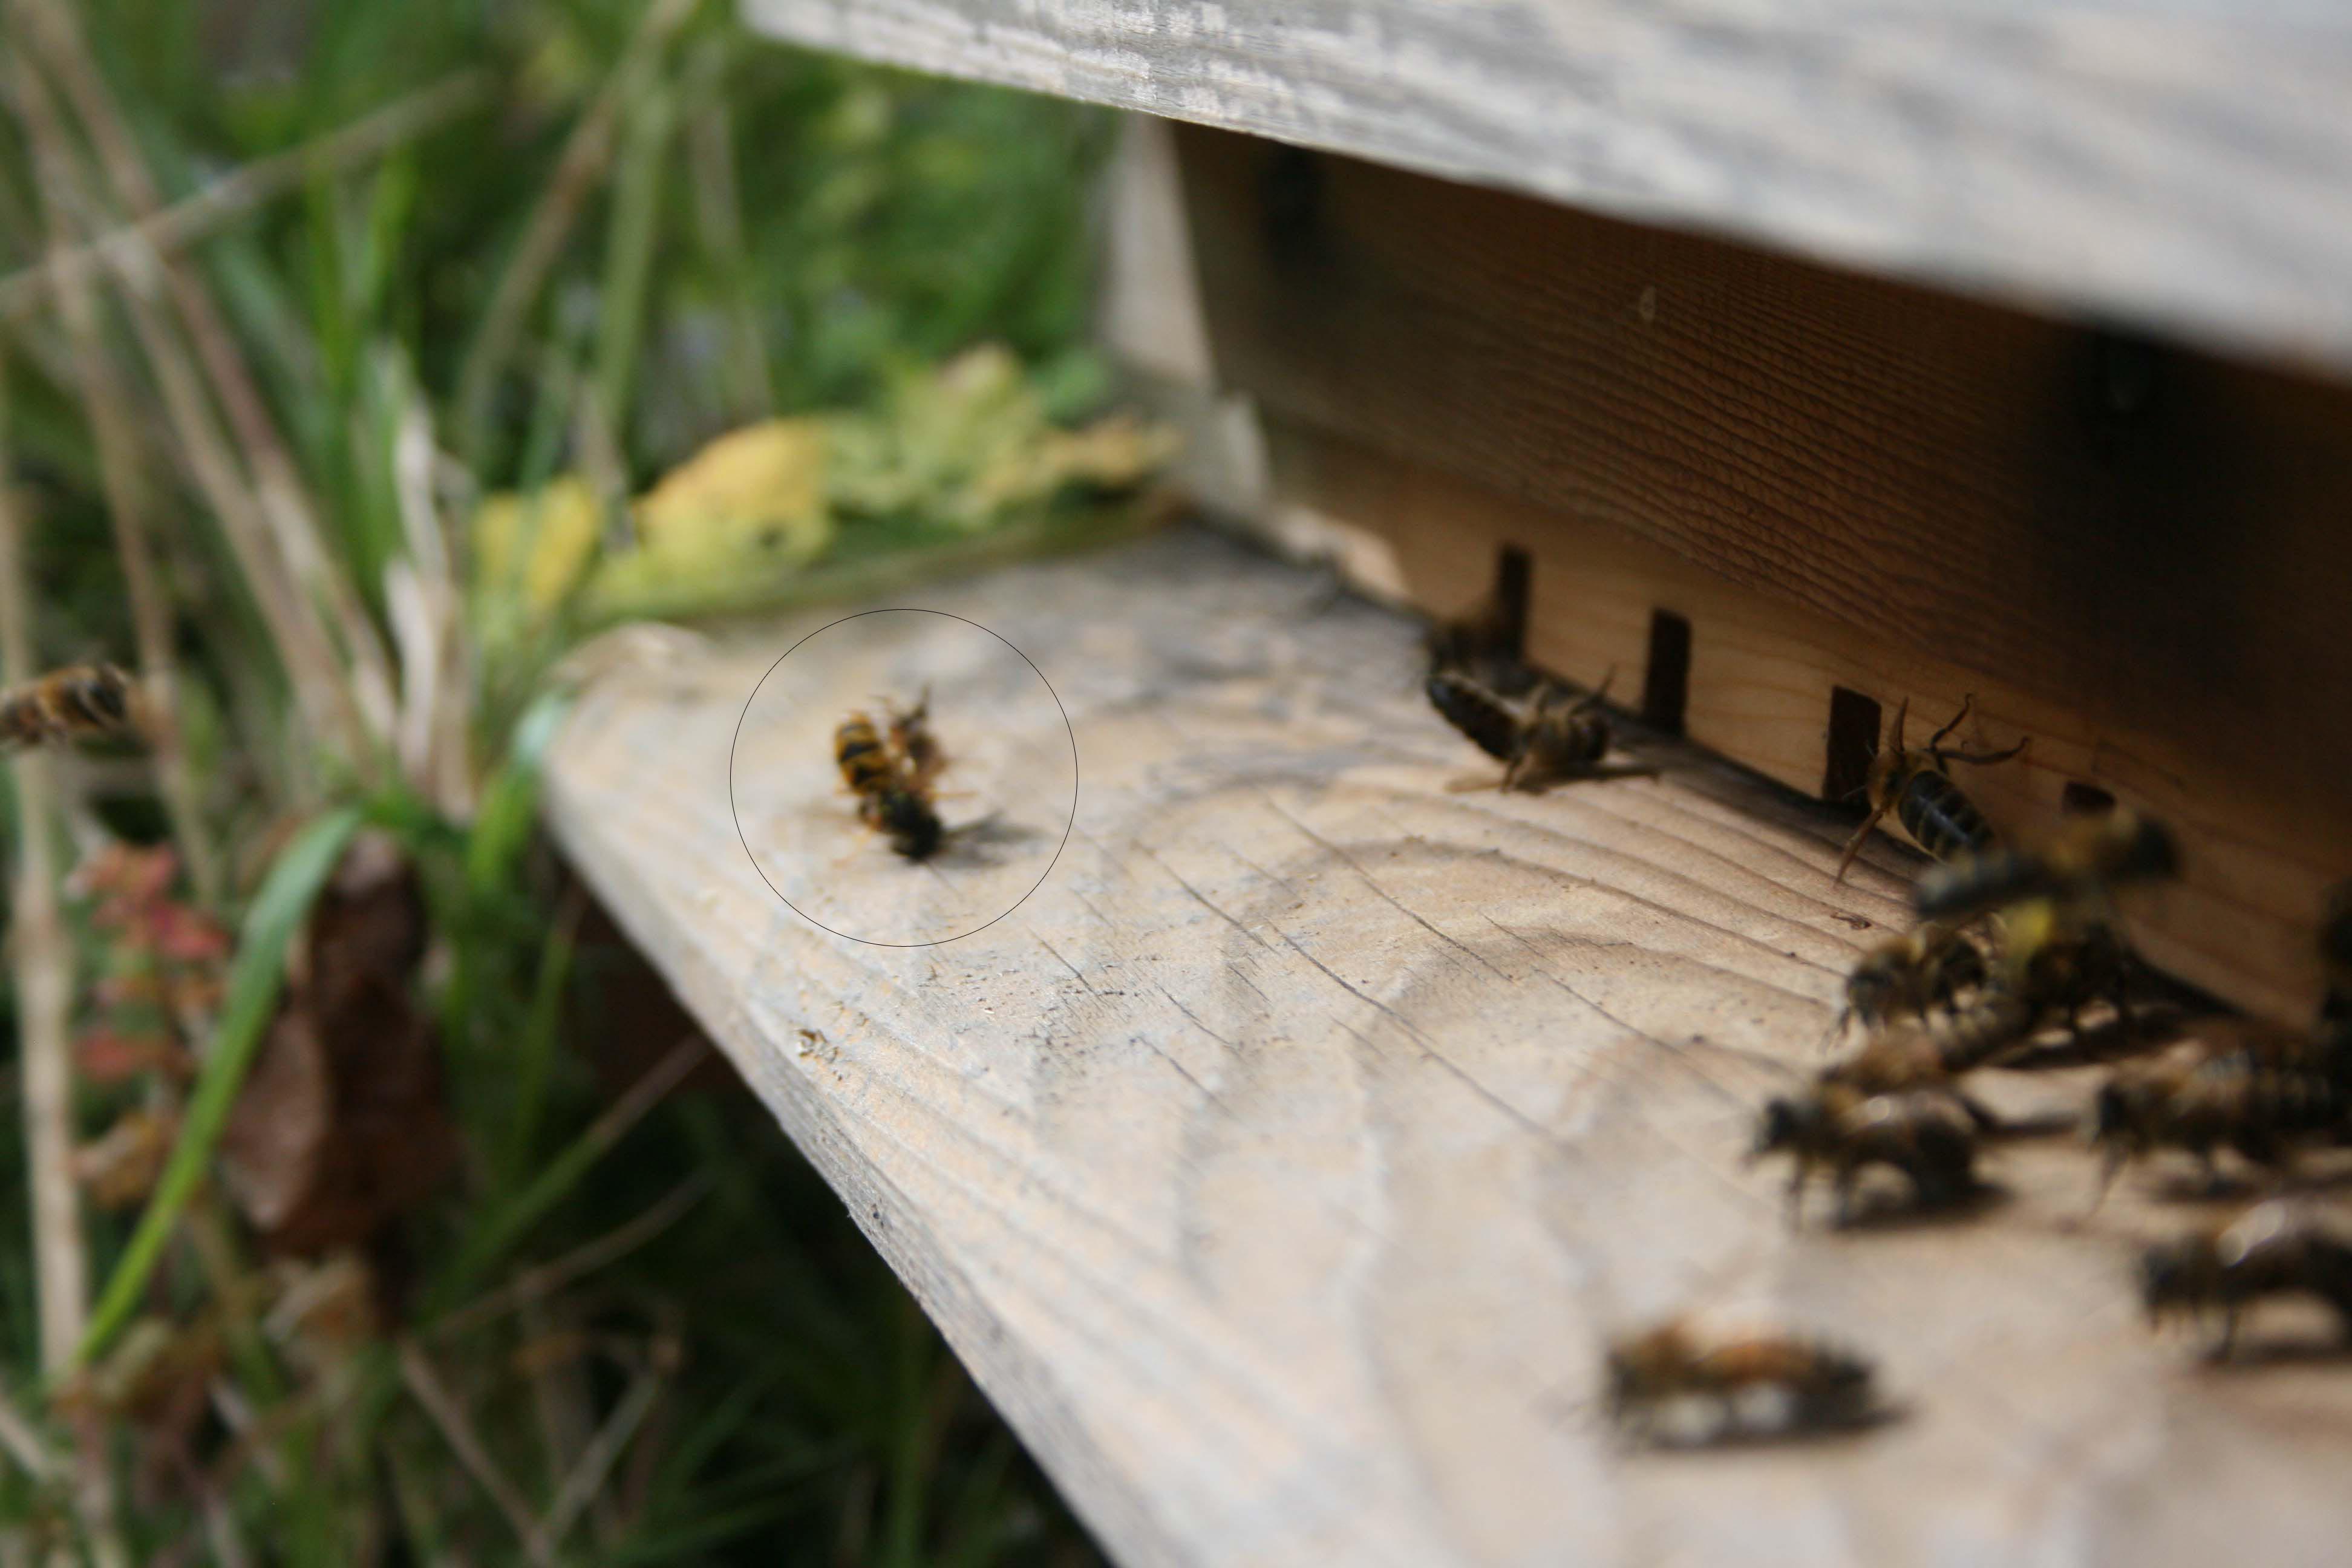 wasps-attacking-bees 012a.jpg